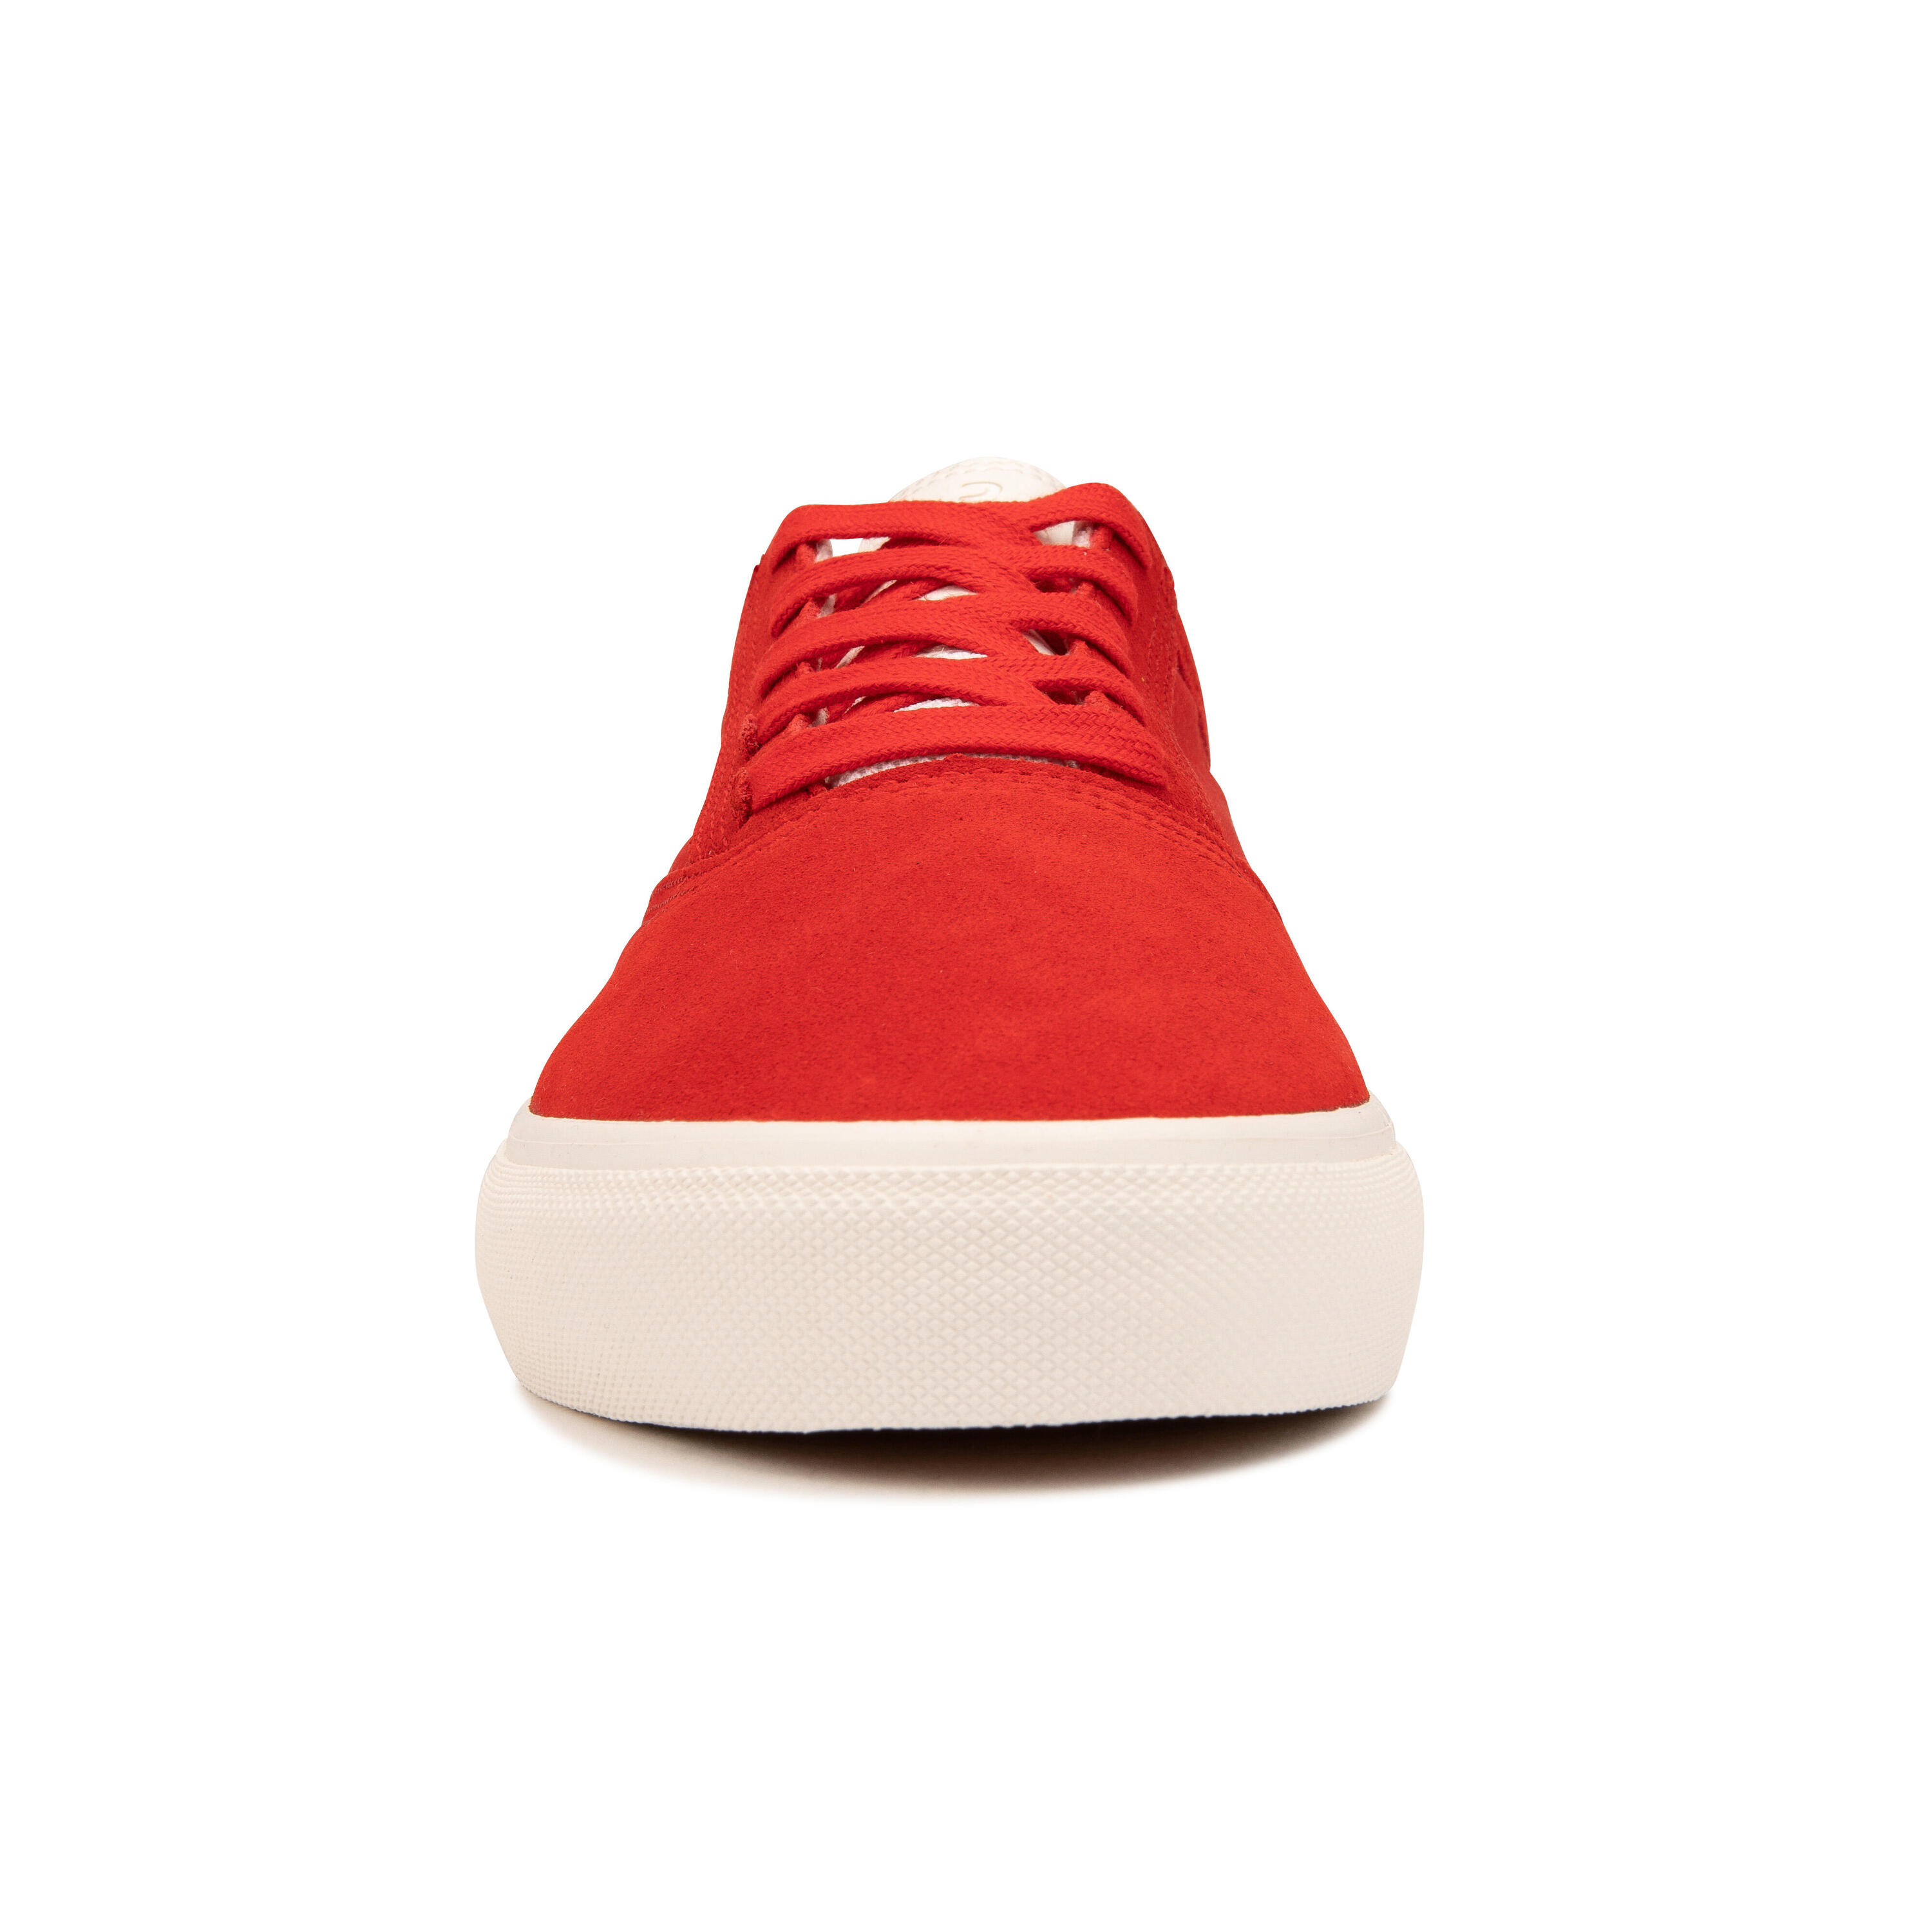 Adult Vulcanised Skate Shoes Vulca 500 II - Red/White 4/14